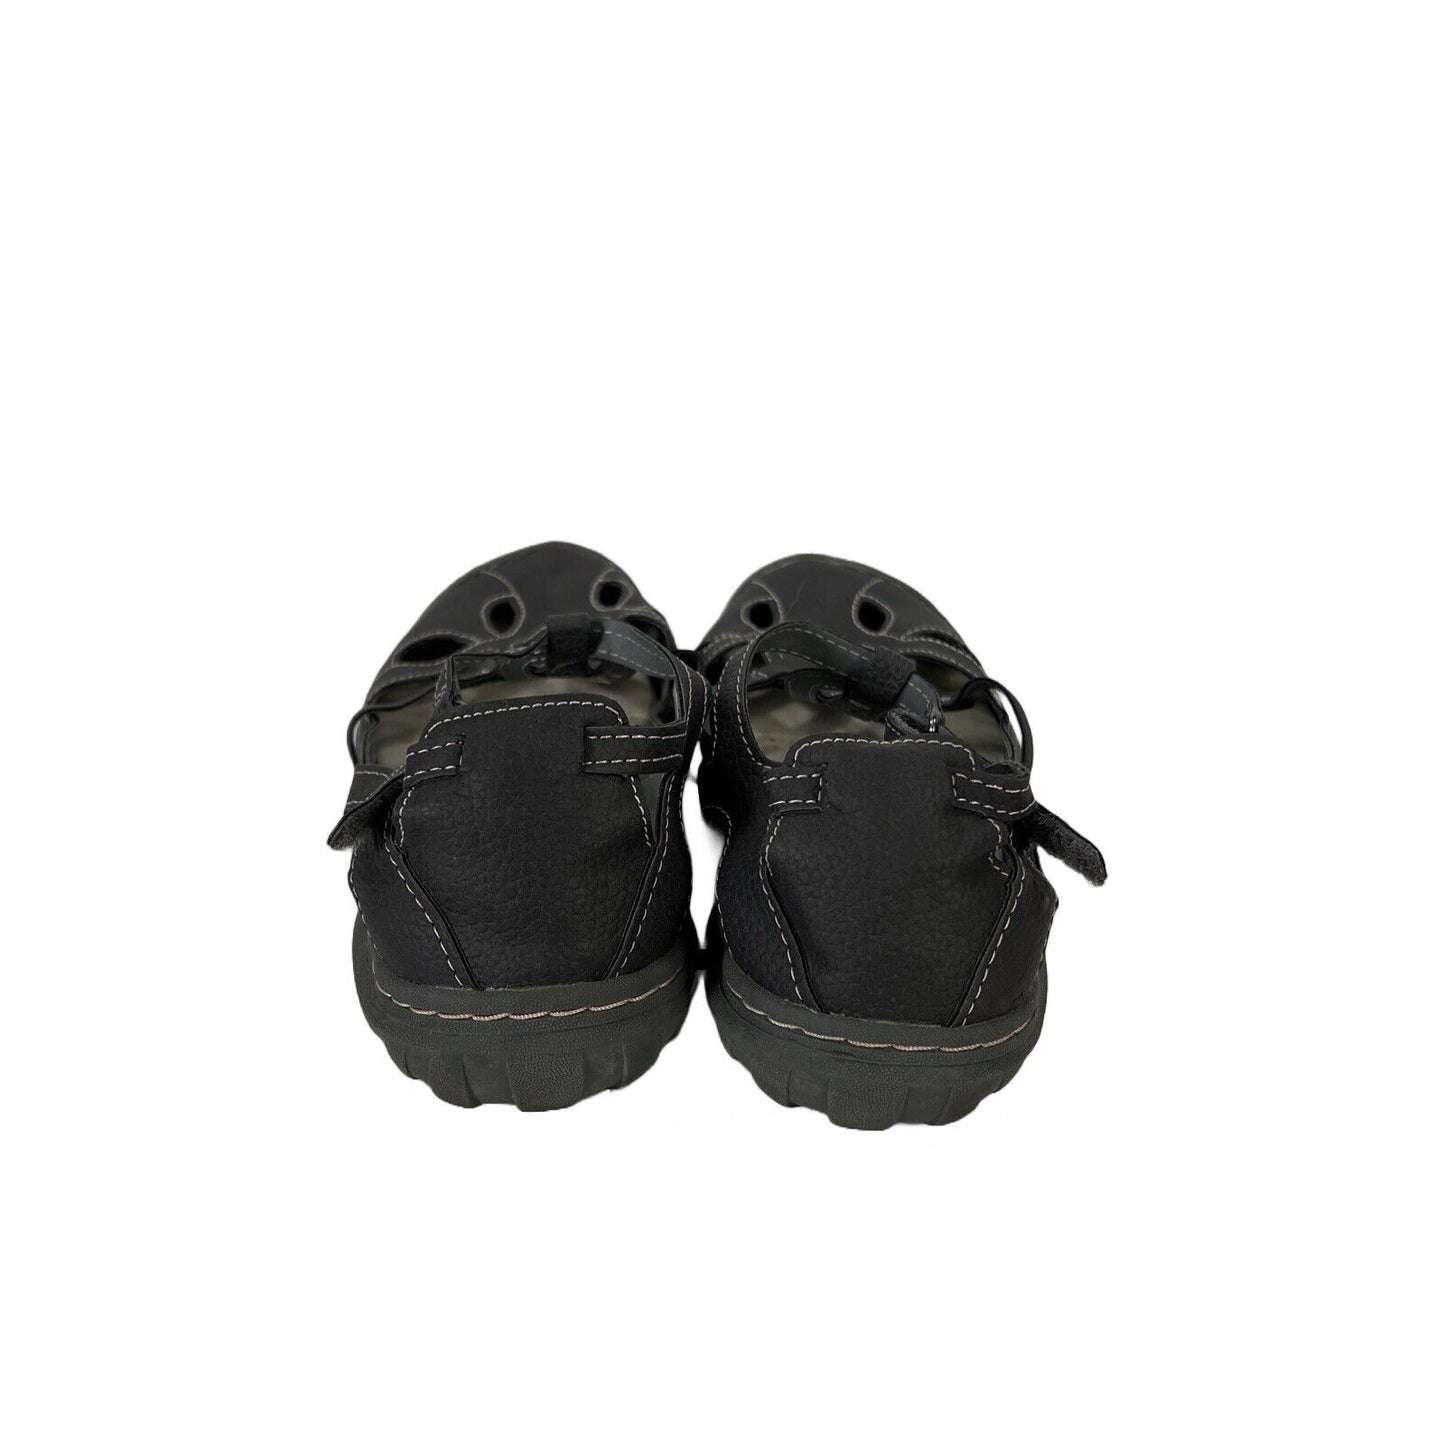 JBU by Jambu Women's Gray Closed Toe Sandals - 10